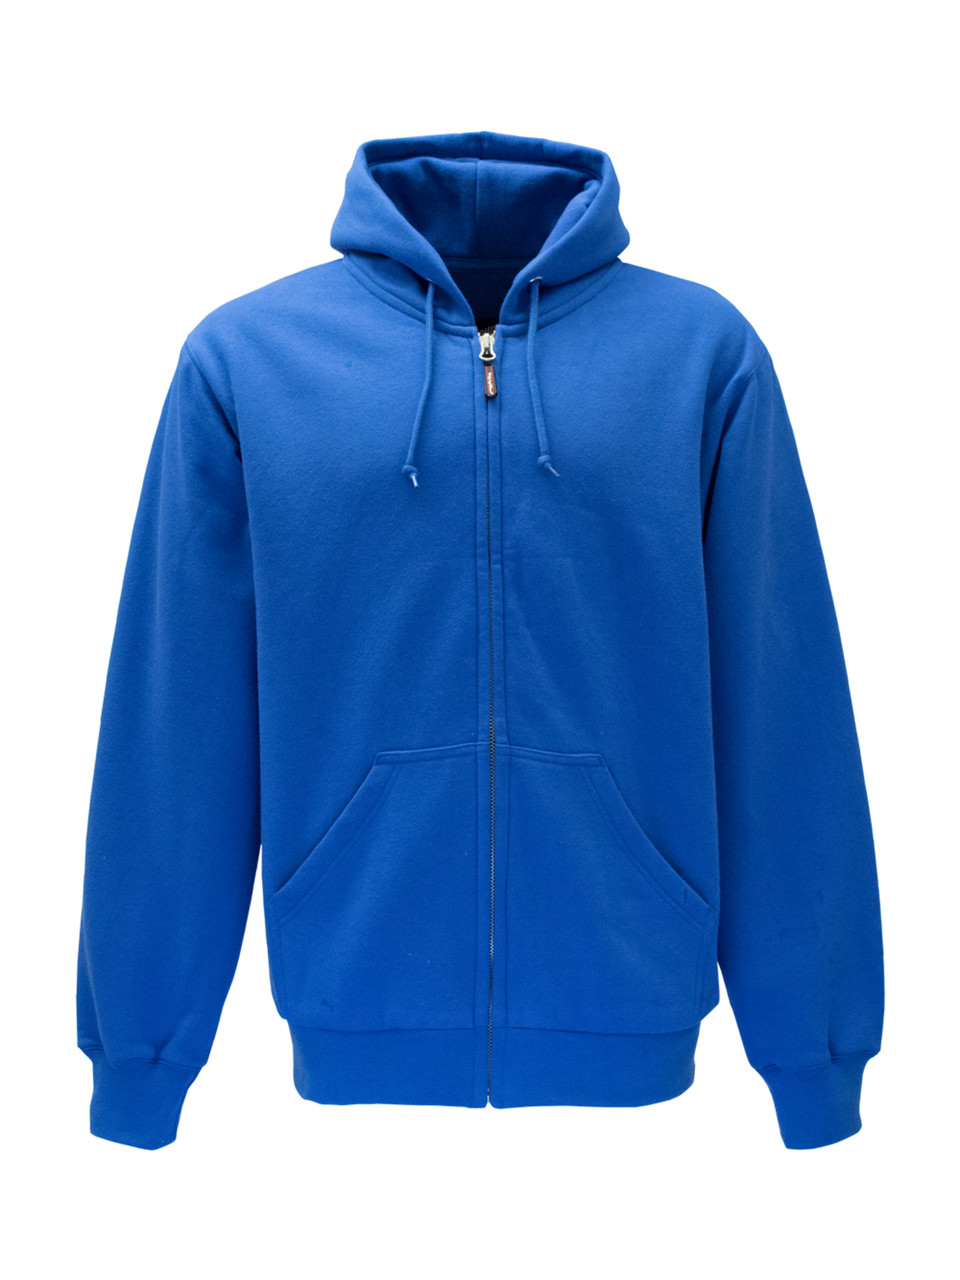 Thermal Lined Sweatshirt - Royal Blue (487) | RefrigiWear